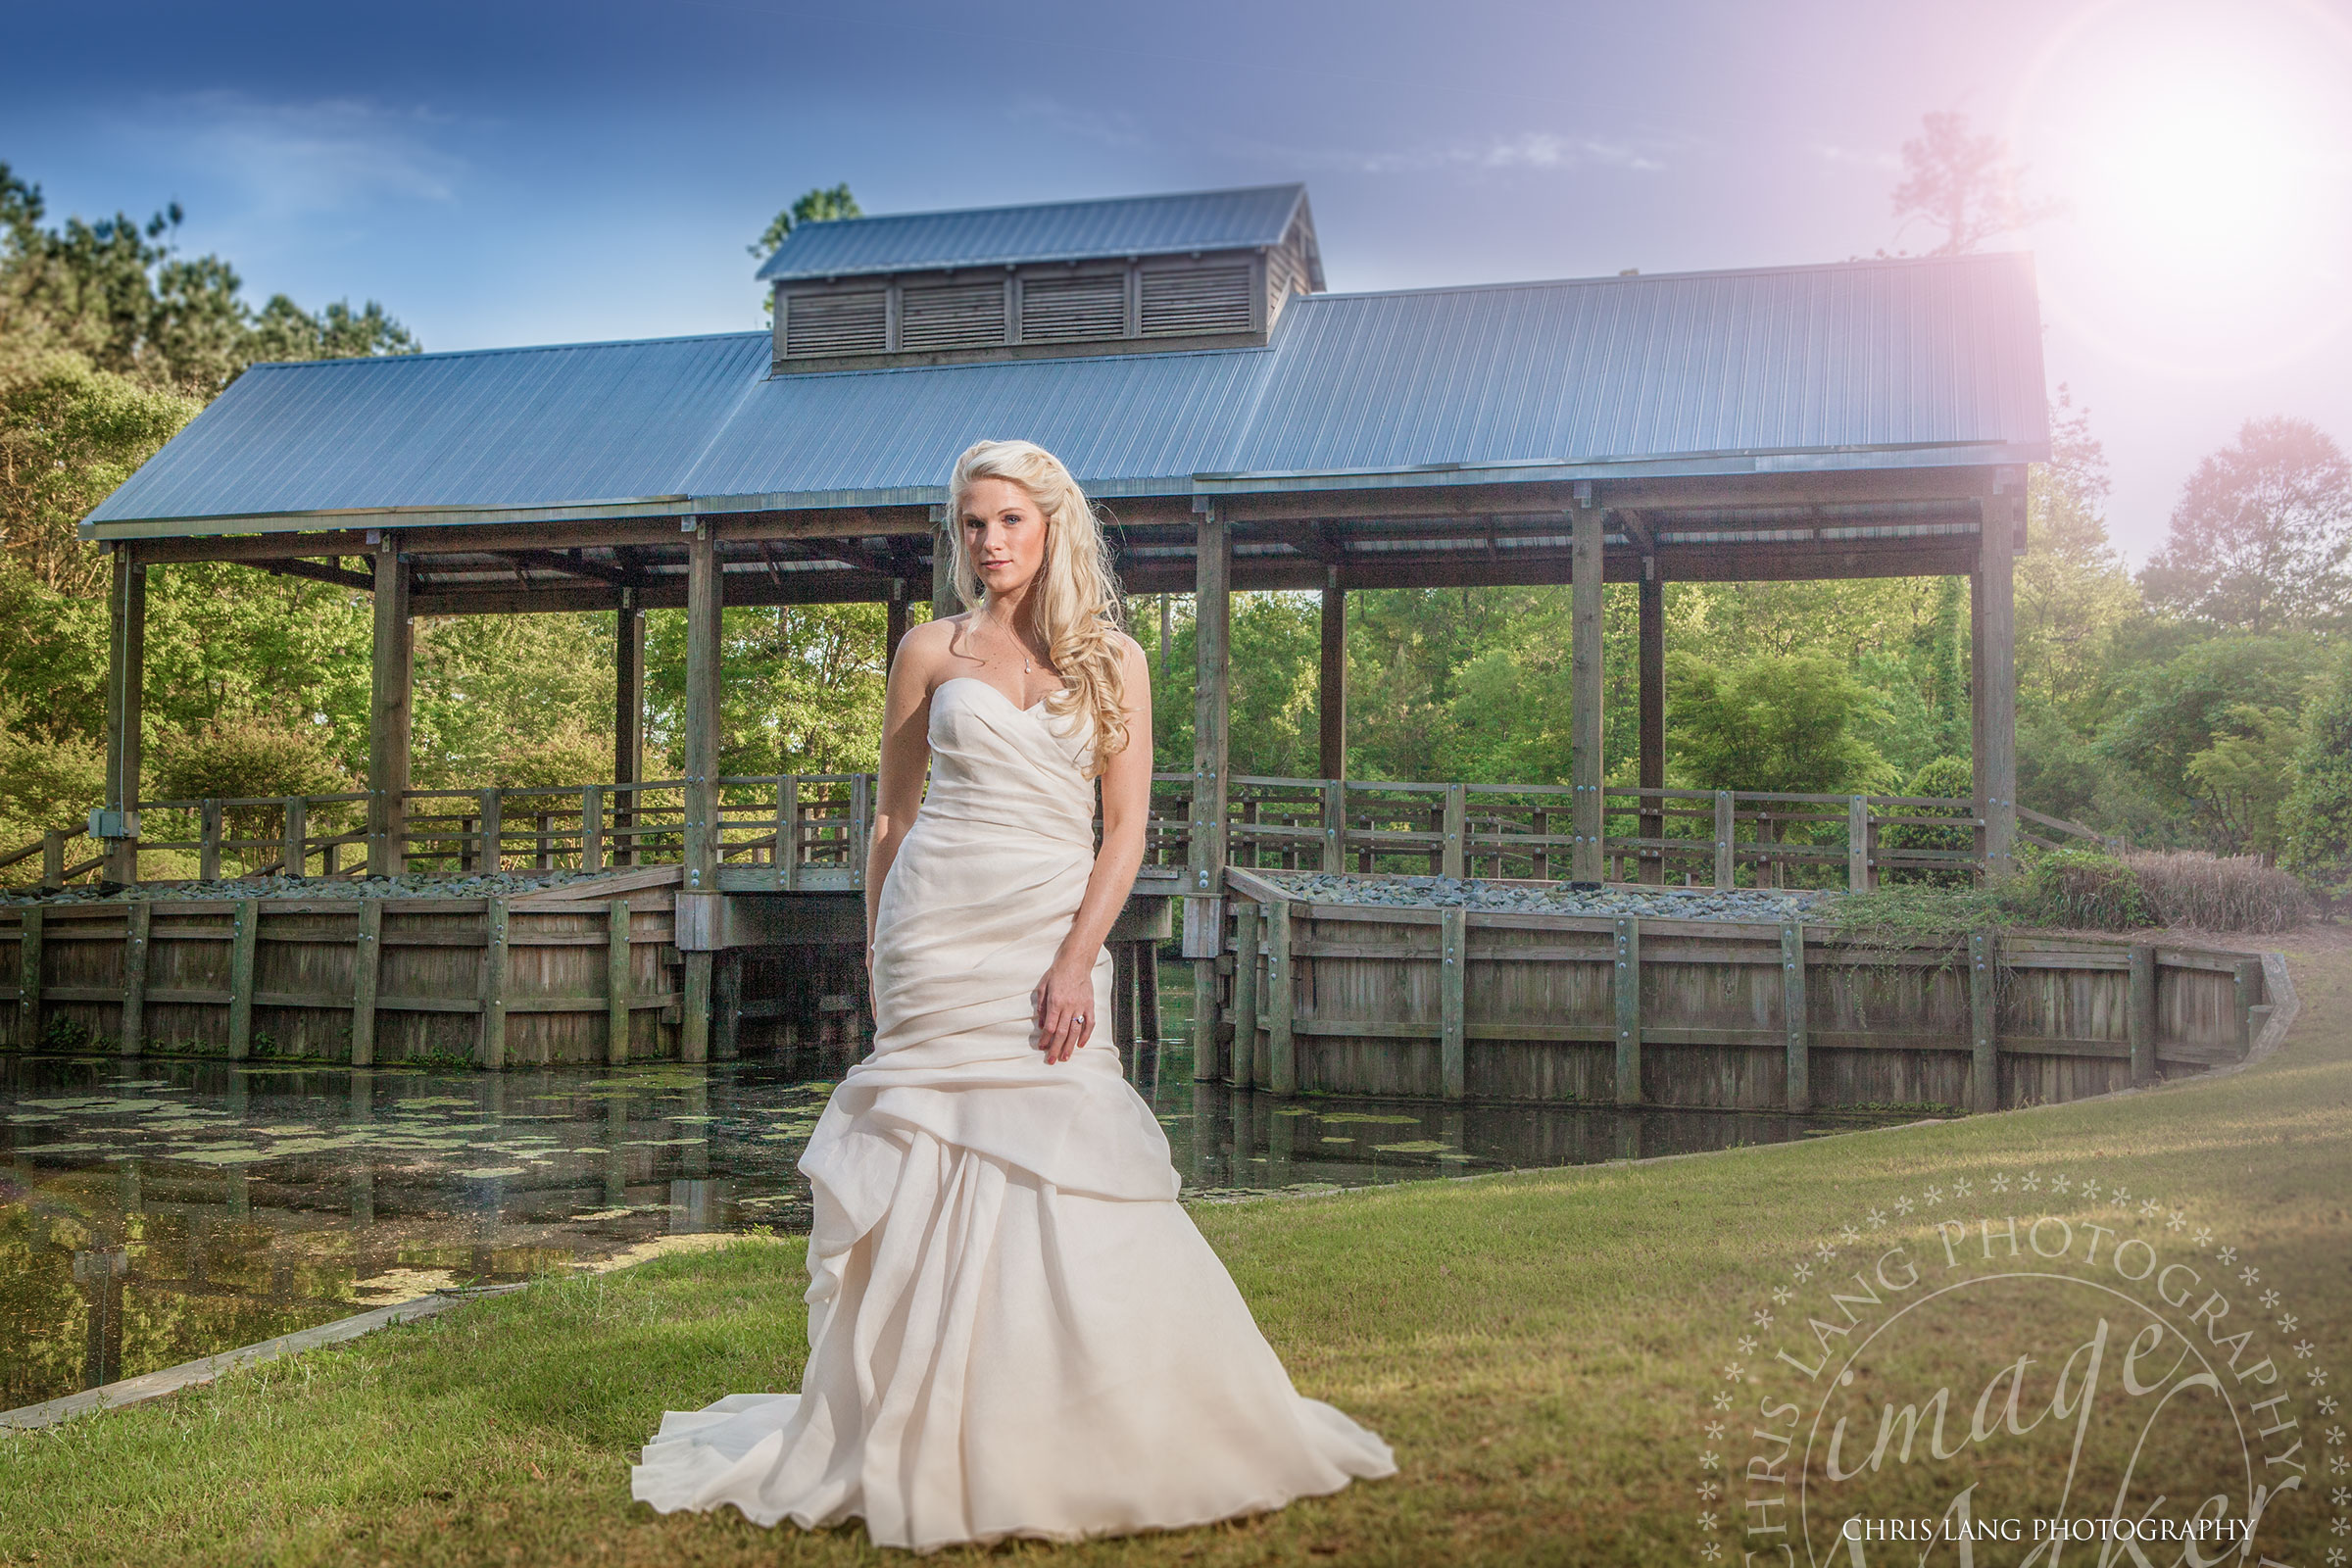 River Landing Wallace, NC - Bridal Photography - Wedding Photographers